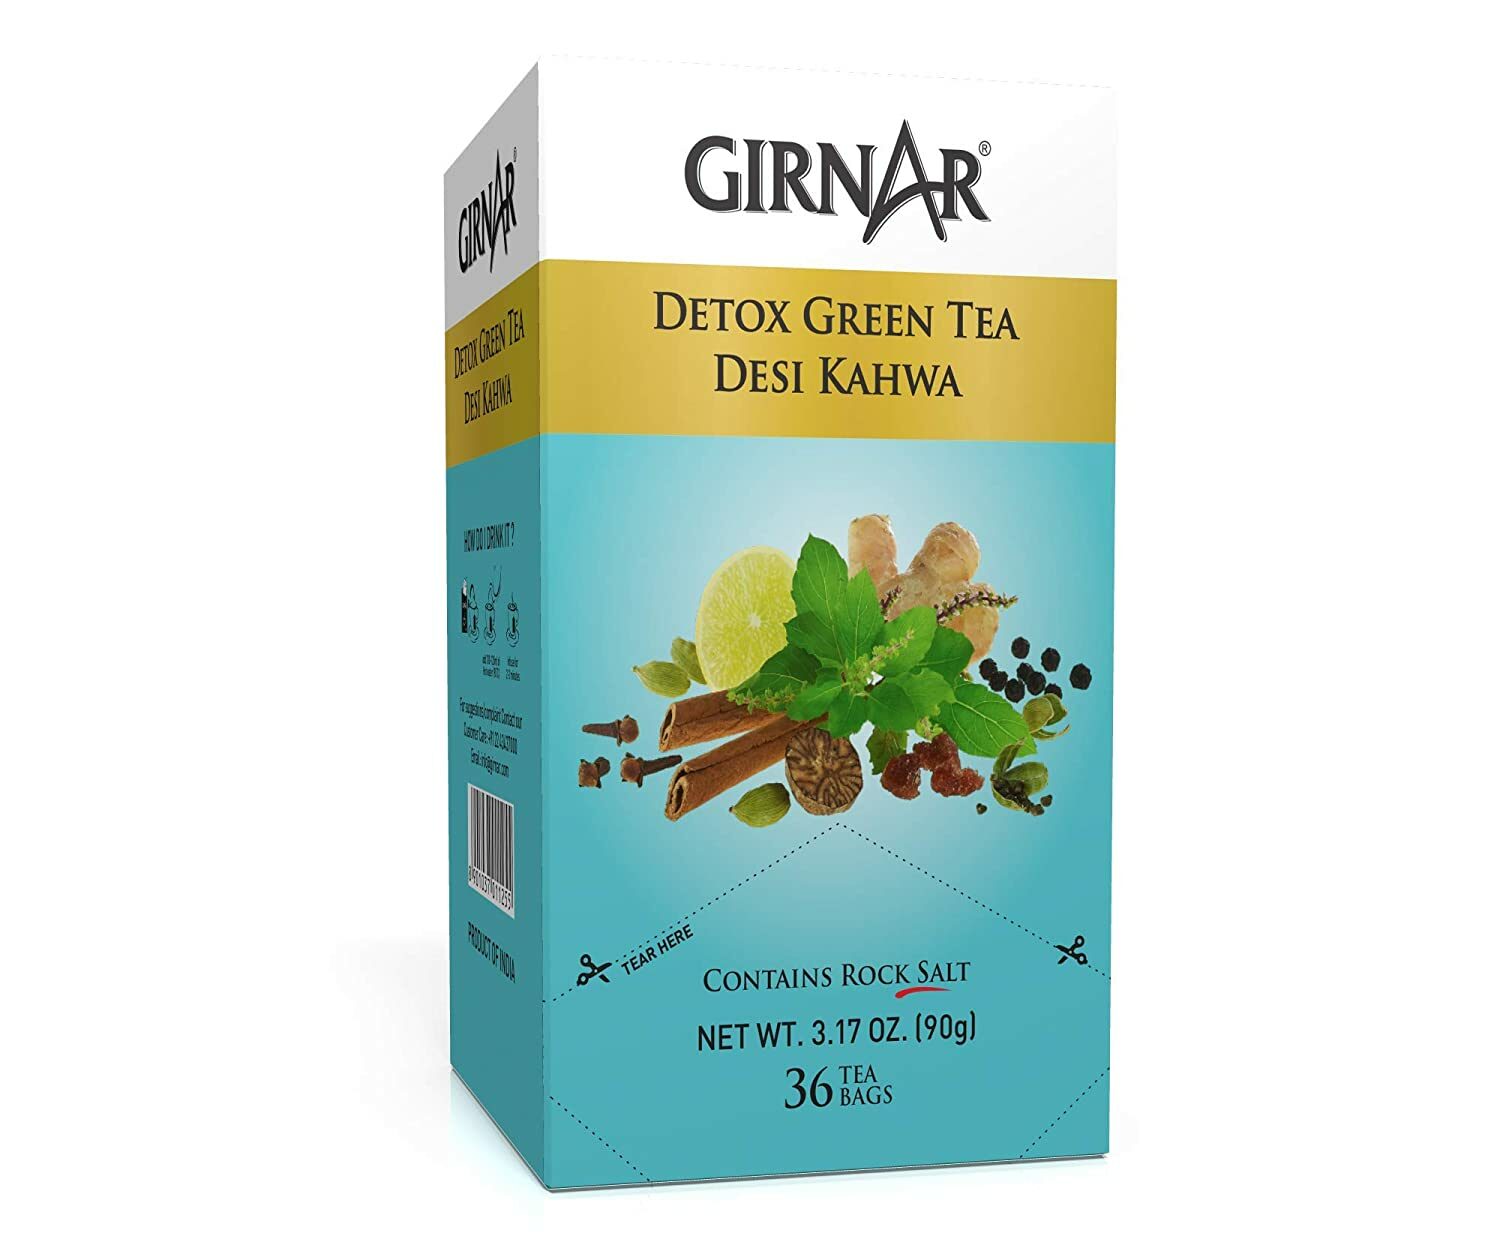 Girnar detox green tea